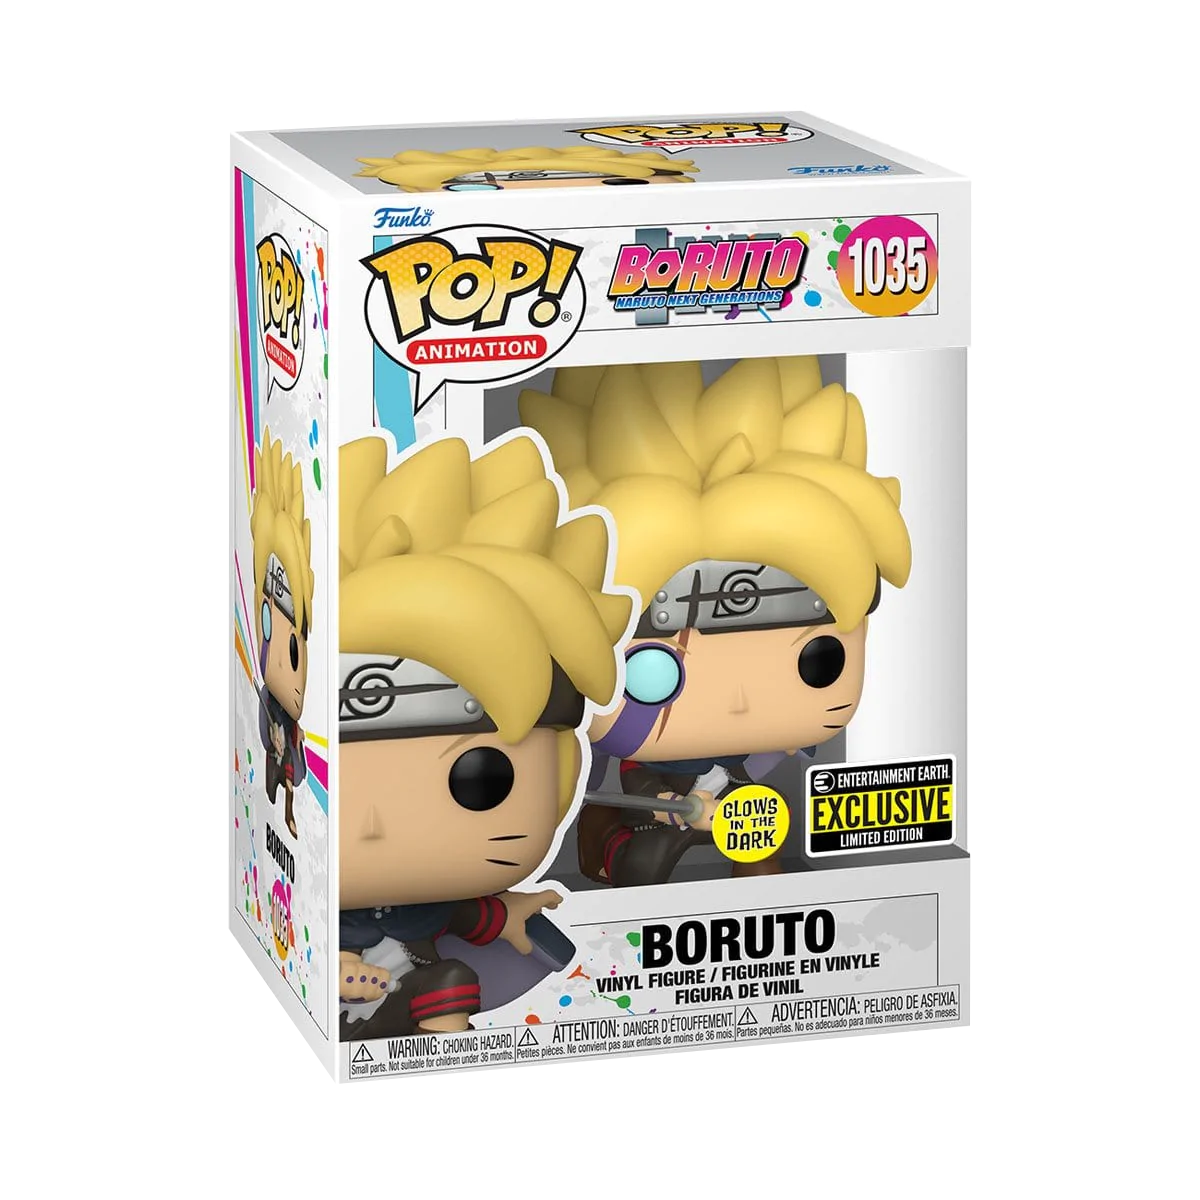 Funko - POP! Animation - Boruto Naruto Next Generations - Boruto #1035 - Glows In The Dark - Entertainment Earth Exclusive Limited Edition